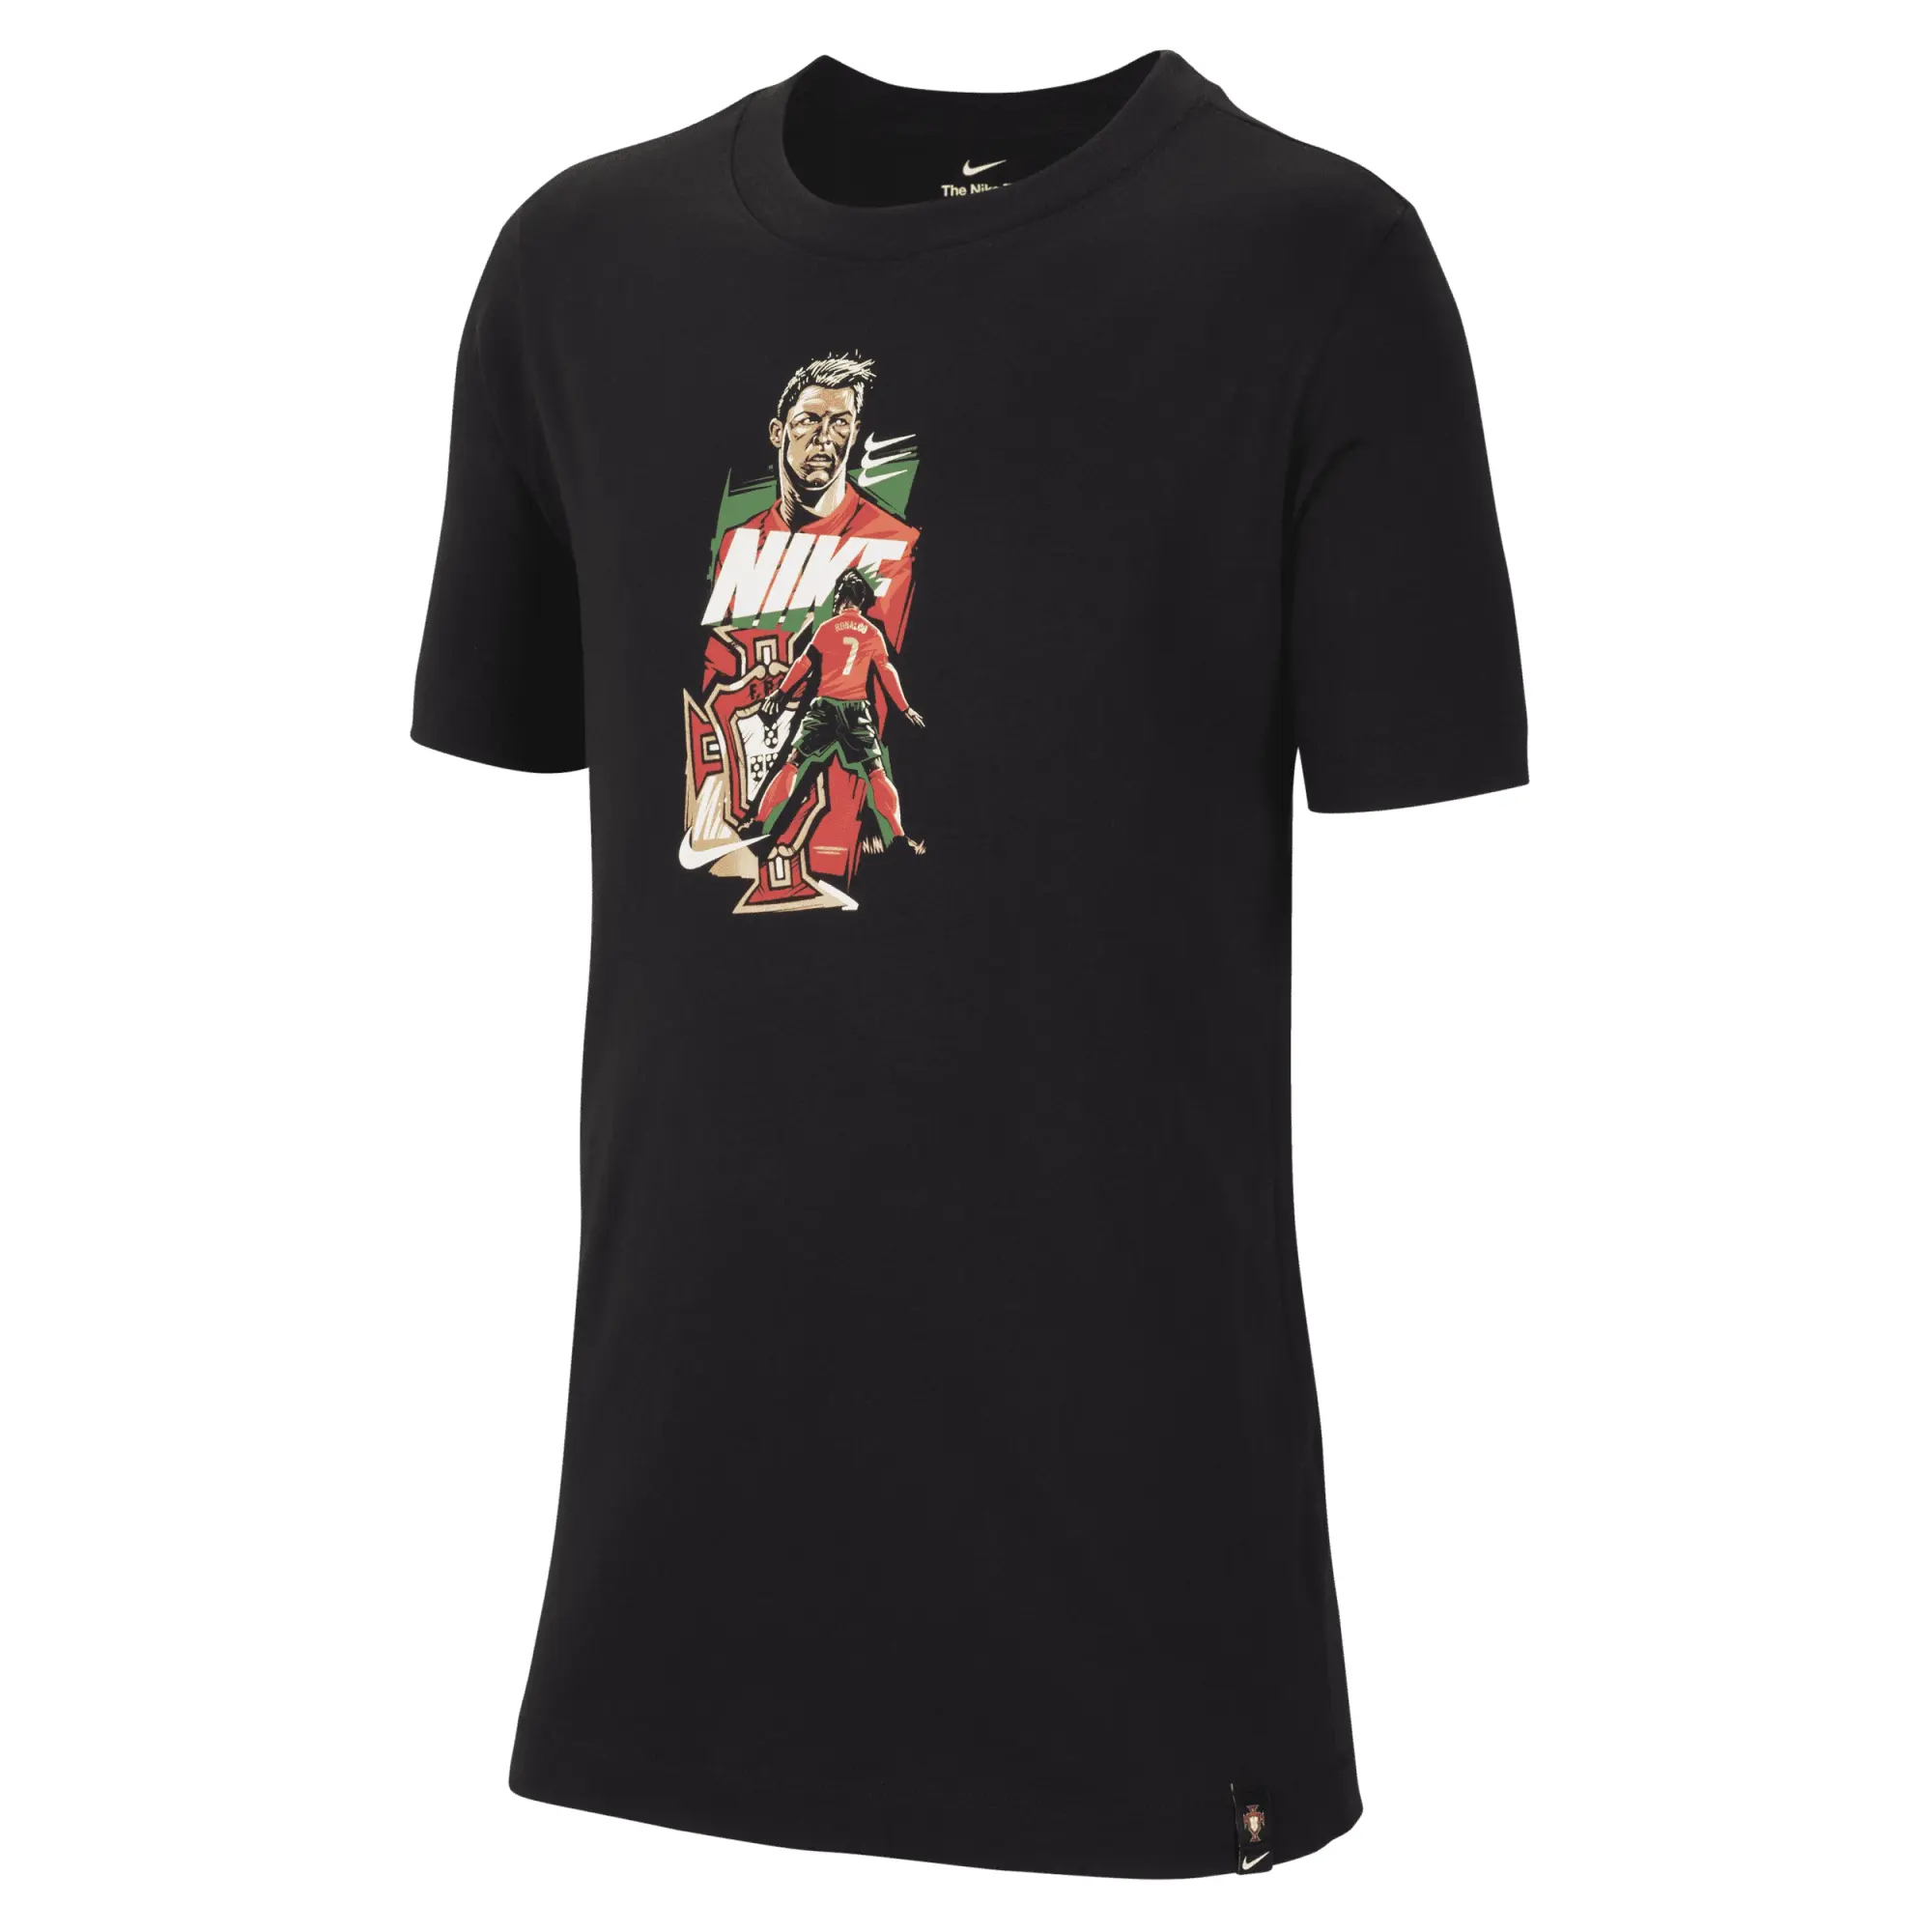 Nike Portugal Ronaldo Player KIDS T-Shirt - Black - L / 147-158 cm